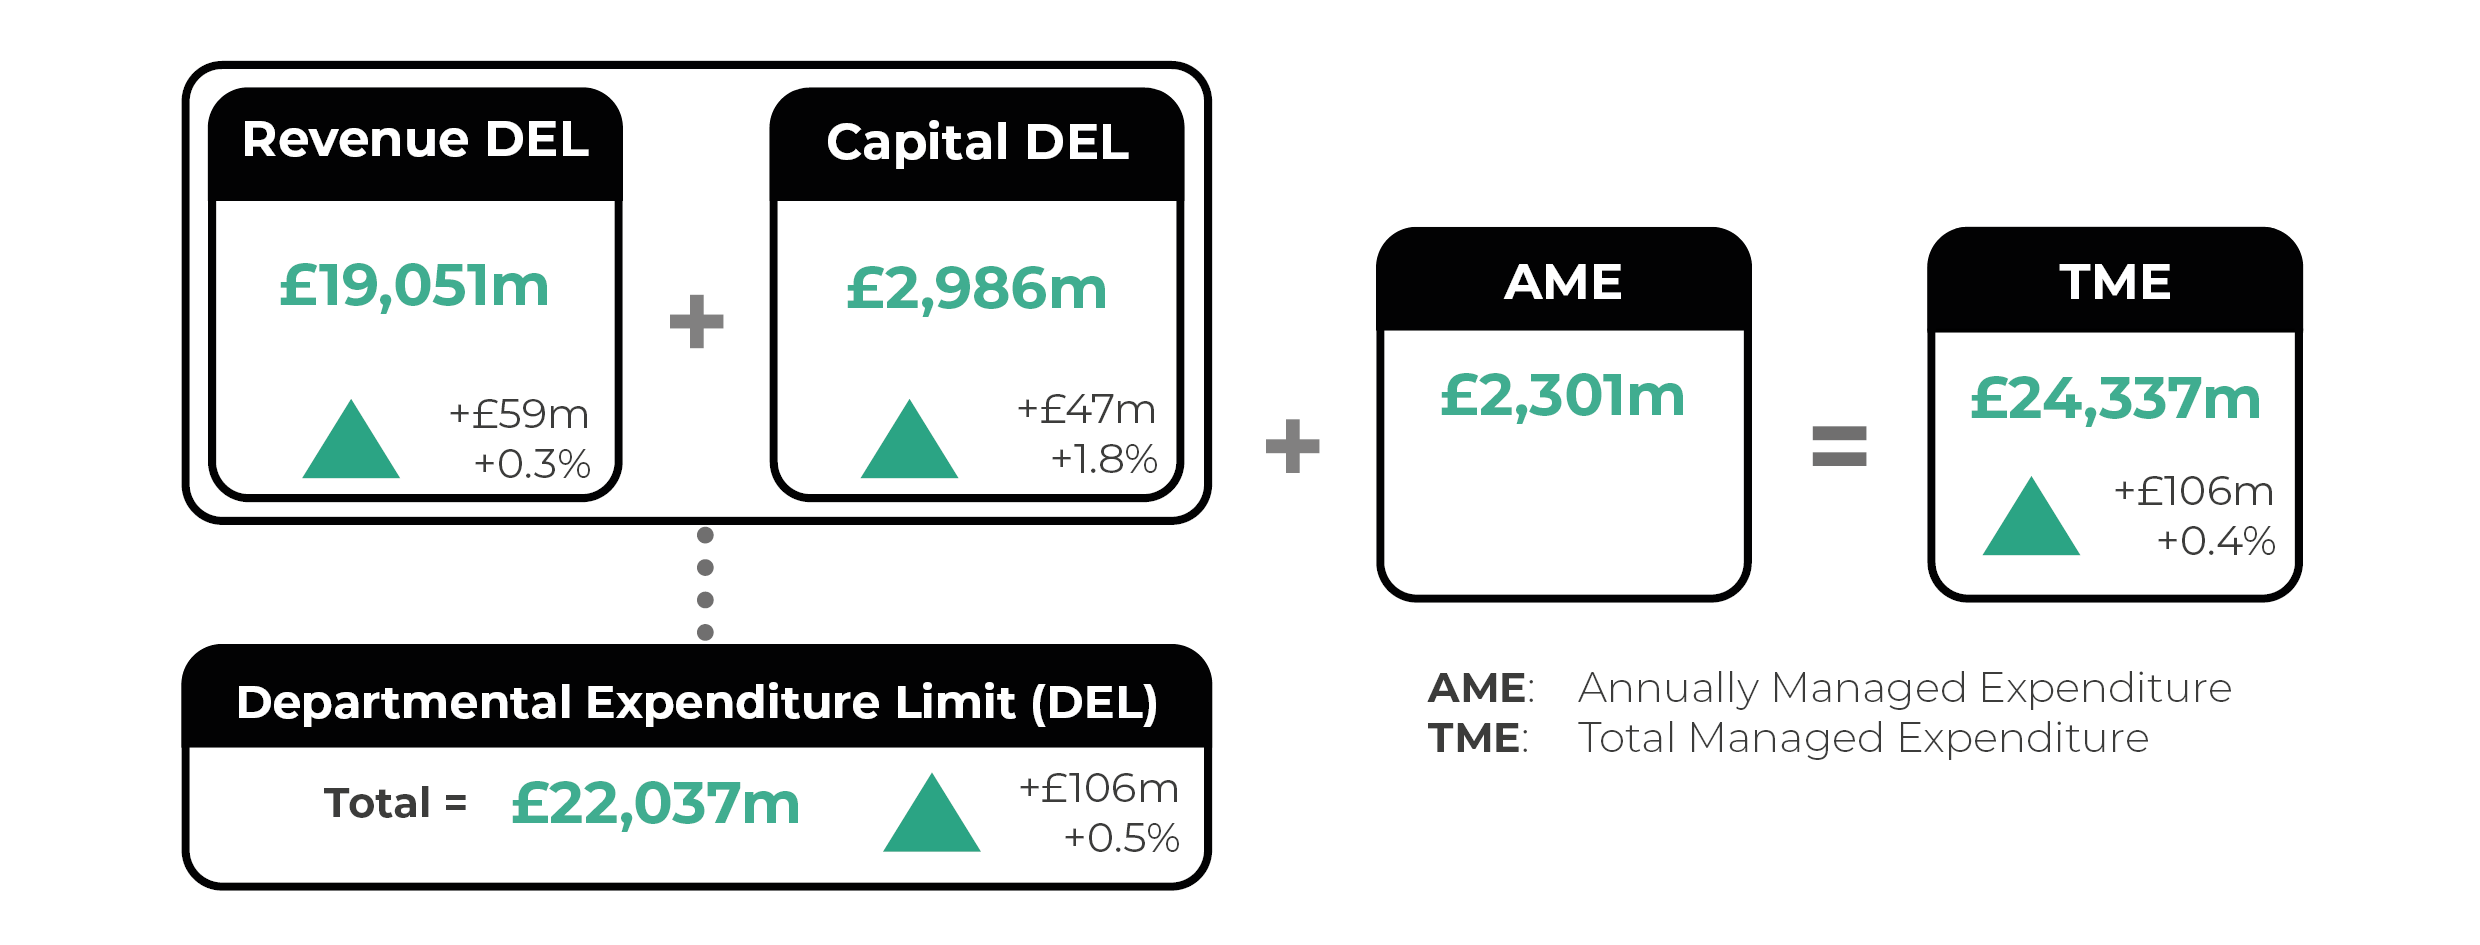 Revenue Departmental Expenditure Limit (DEL): £19,051m (up by £59m or 0.3%). Capital DEL: £2,986m (up by £47m or 1.8%). Total DEL: £22,037m (up by £106m or 0.5%). Annually Managed Expenditure (AME): £2,301m. Total Managed Expenditure (TME): £24,337m (up by £106m or 0.4%).